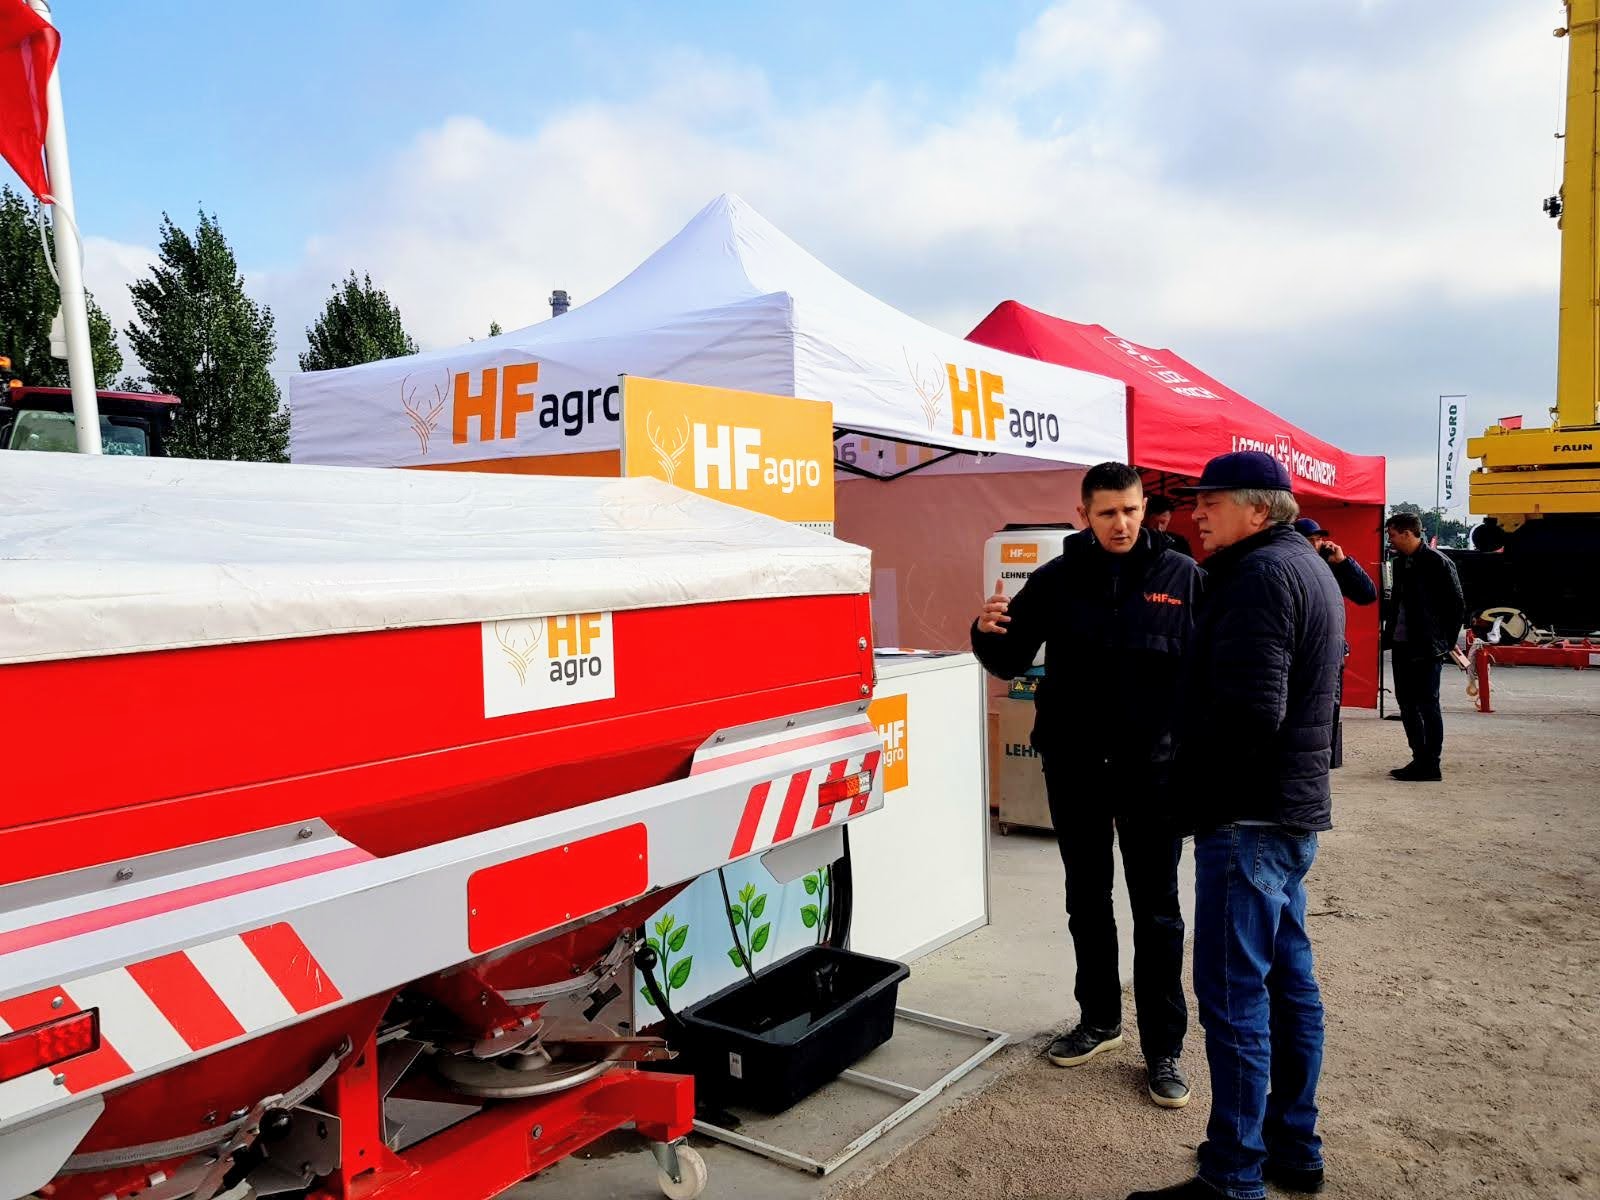 Дебют HF Agro на виставці AGROEXPO-2021